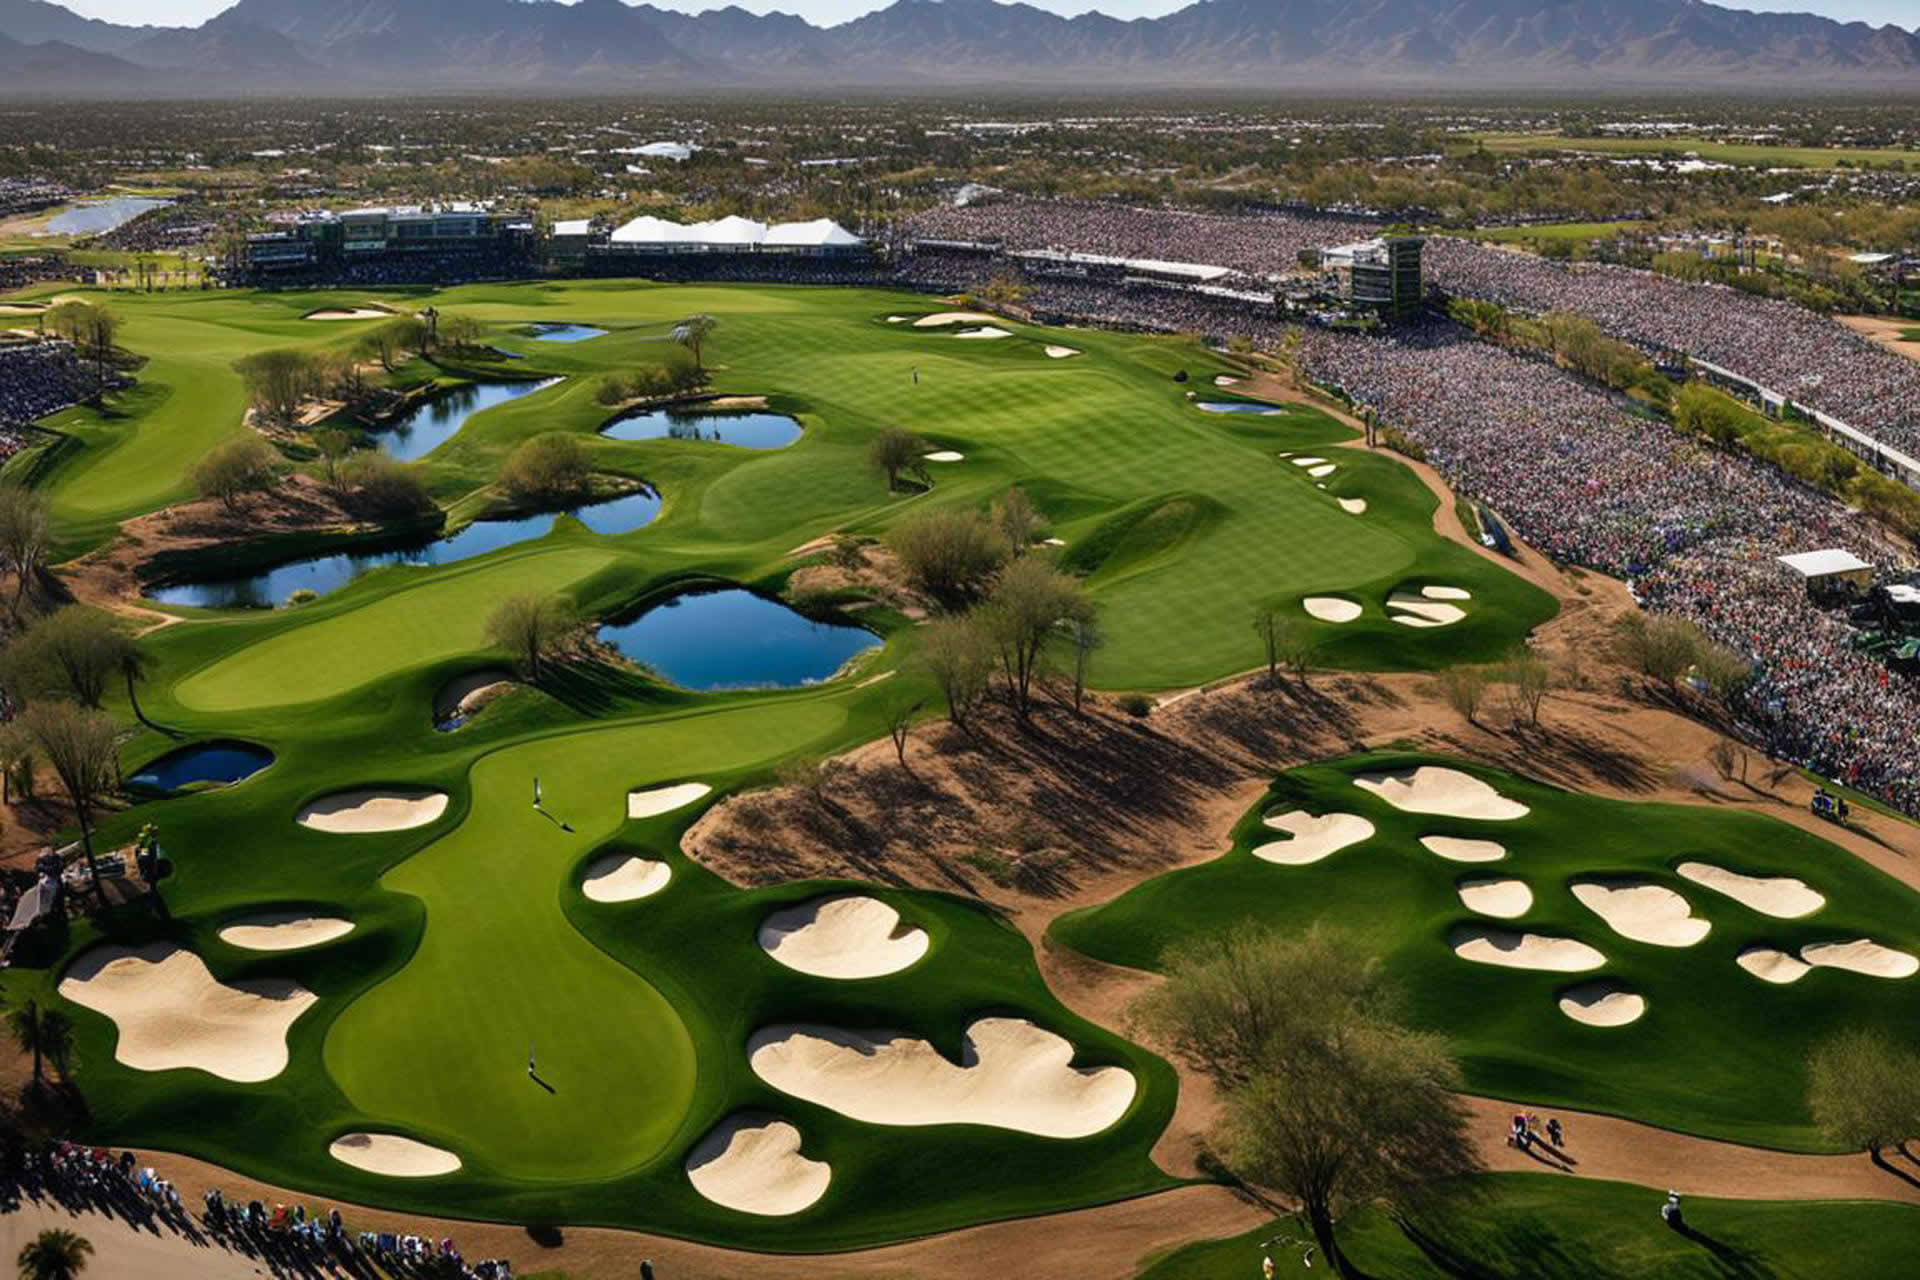 Waste Management Phoenix Open Golf Tournament in Scottsdale Arizona